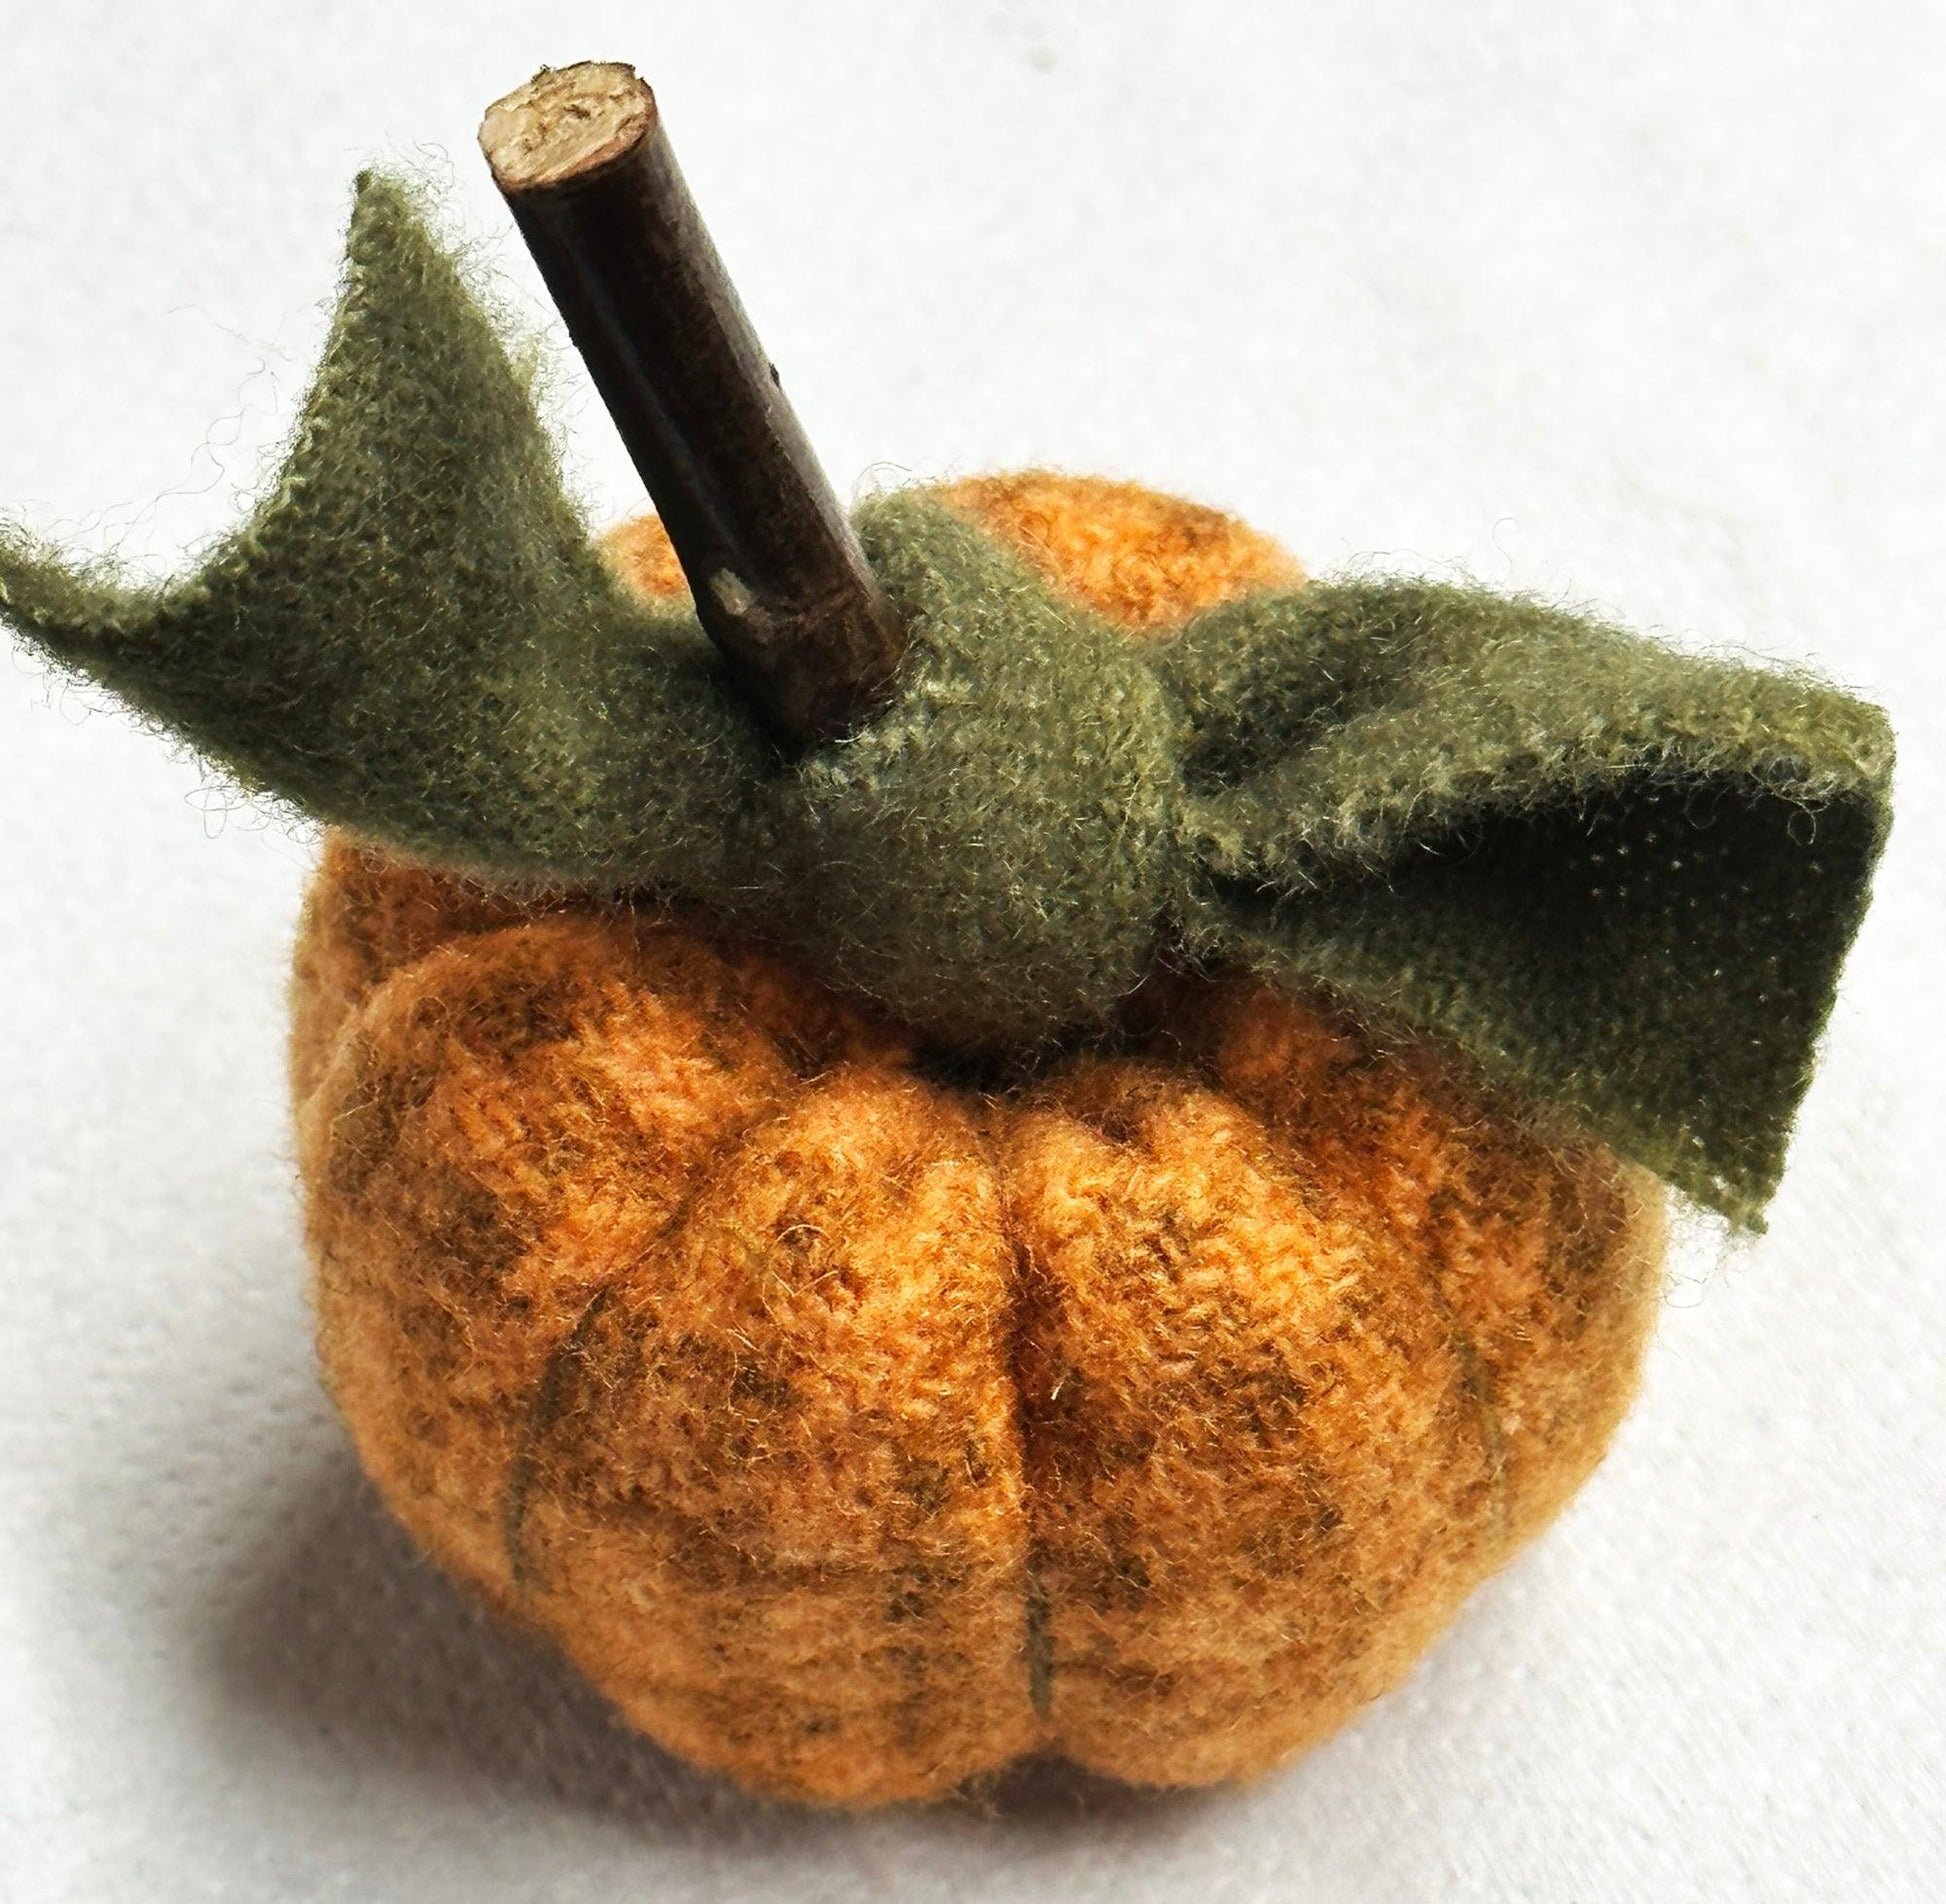 Pumpkin Patch Kit - All About Ewe Wool Shop